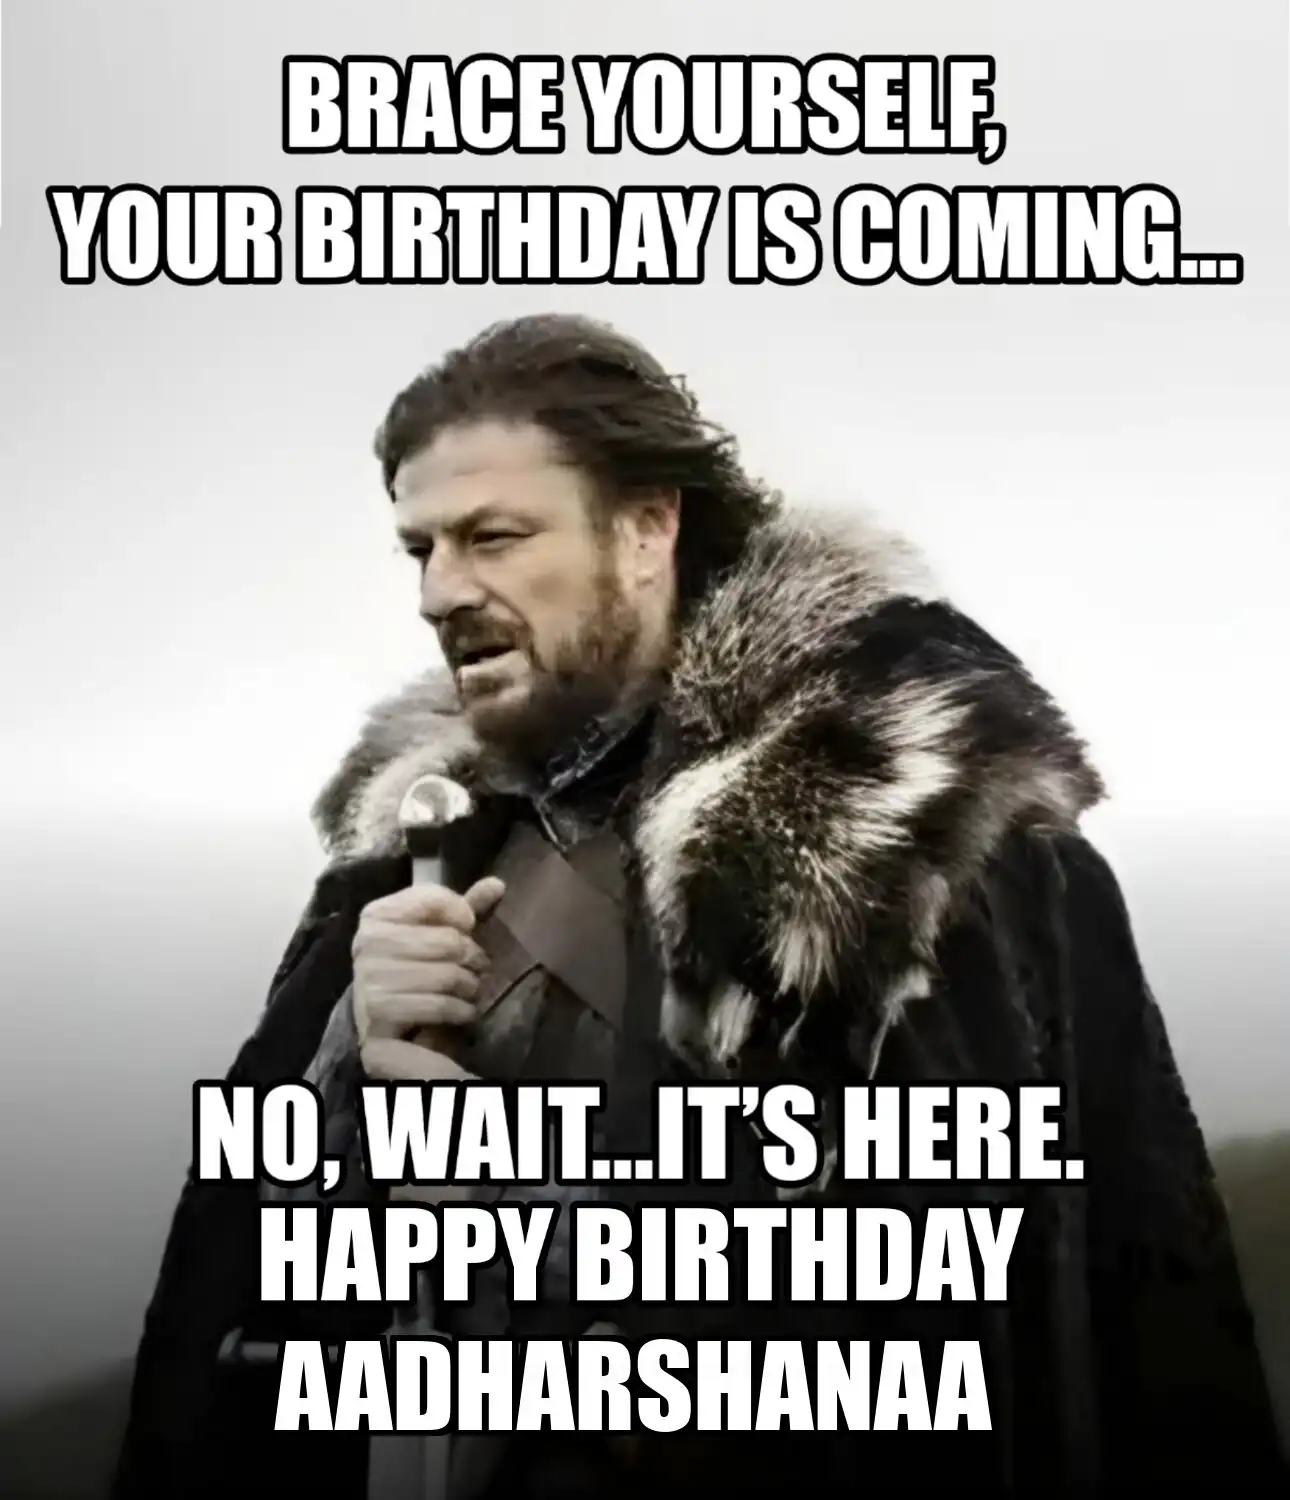 Happy Birthday Aadharshanaa Brace Yourself Your Birthday Is Coming Meme